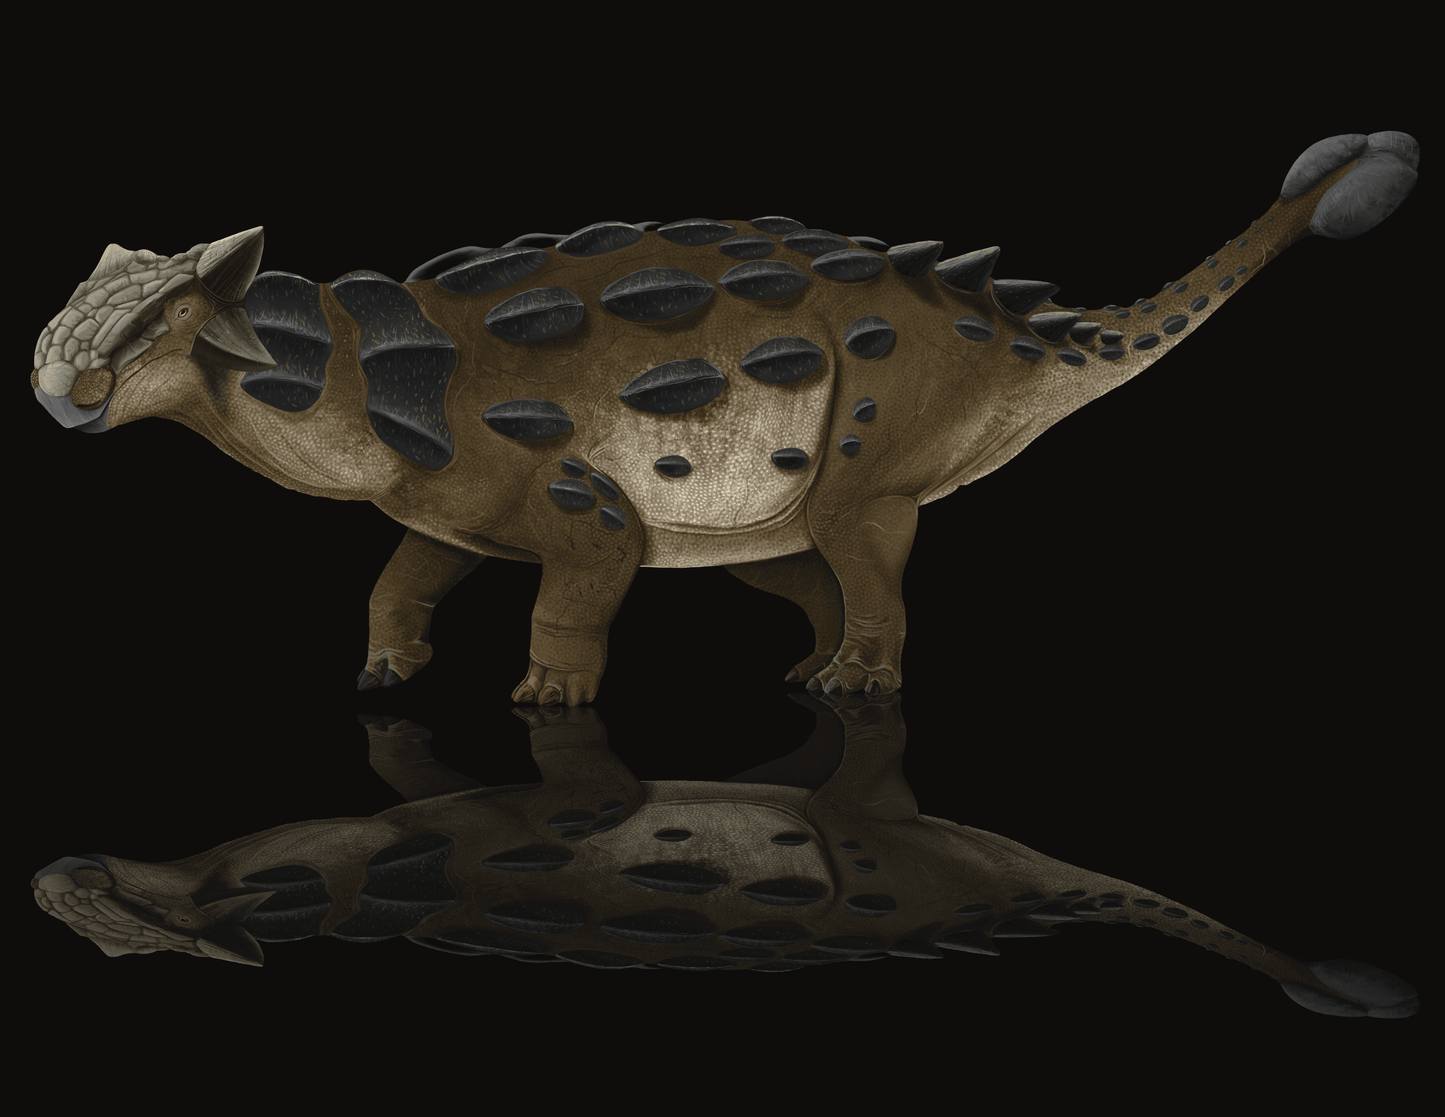 Ankylosaurus Scute Cast and Artwork - Fossil Crates Ankylosaurus scute cast